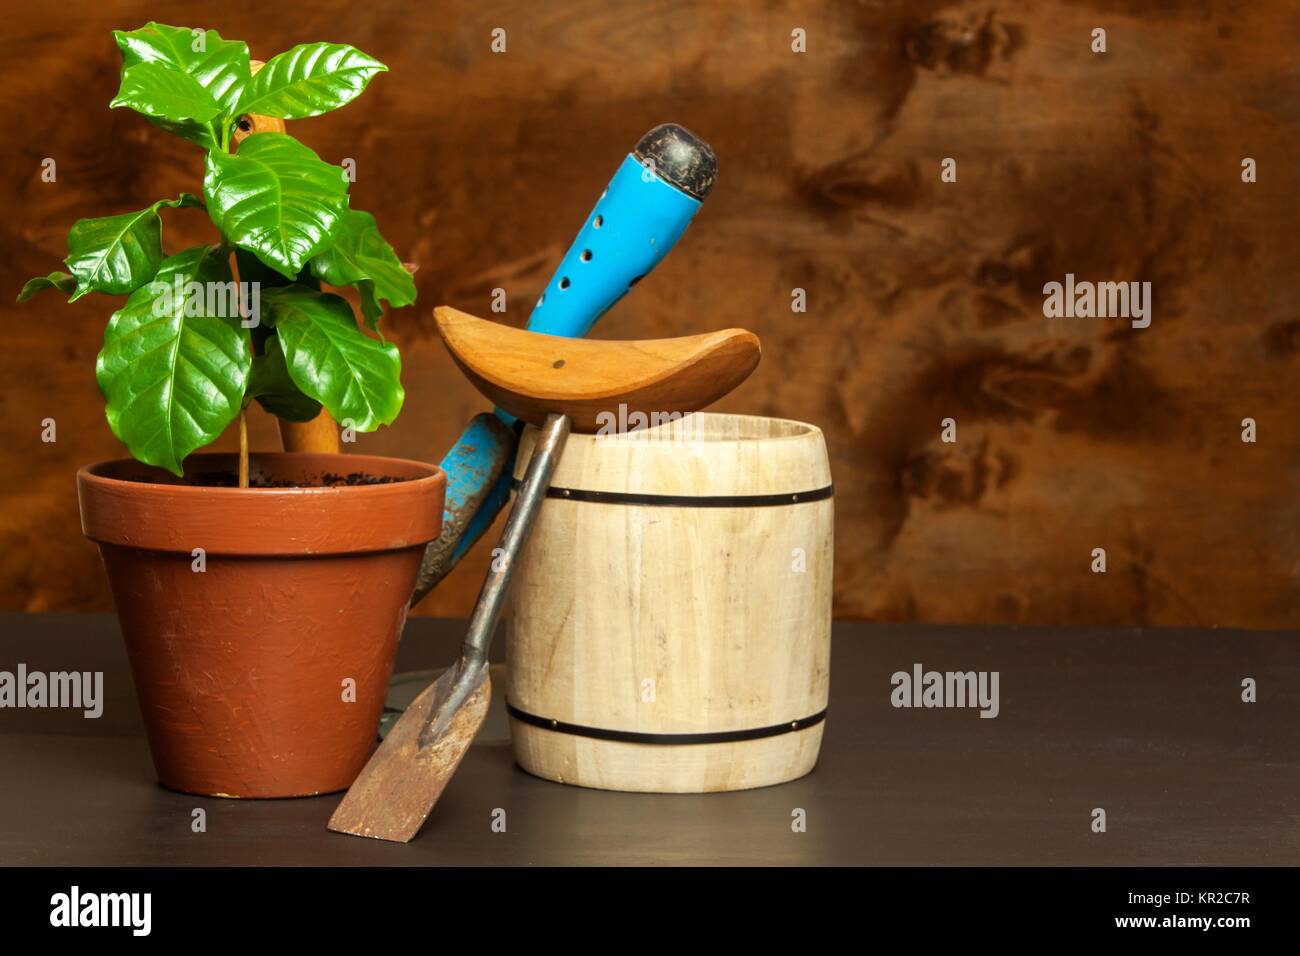 Domestic coffee growing. Coffee Shop. Saplings of coffee on the table. Growing plants Stock Photo